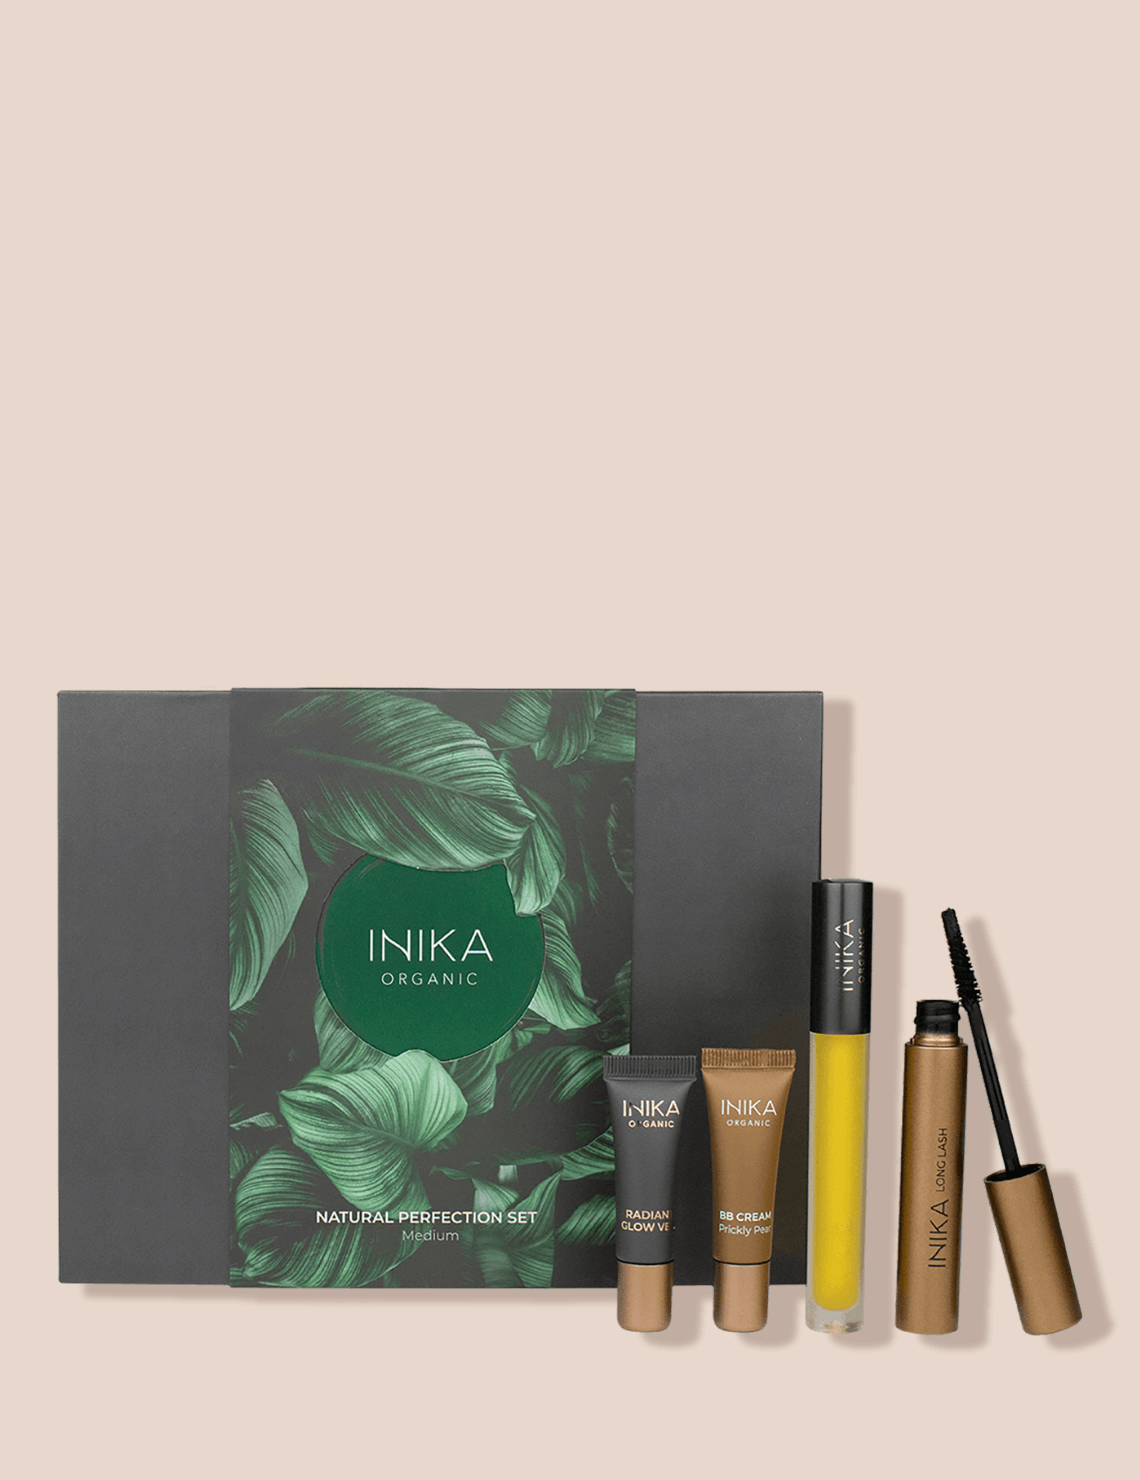 INIKA Organic Natural Perfection Set (Medium) | INIKA Organic | 01